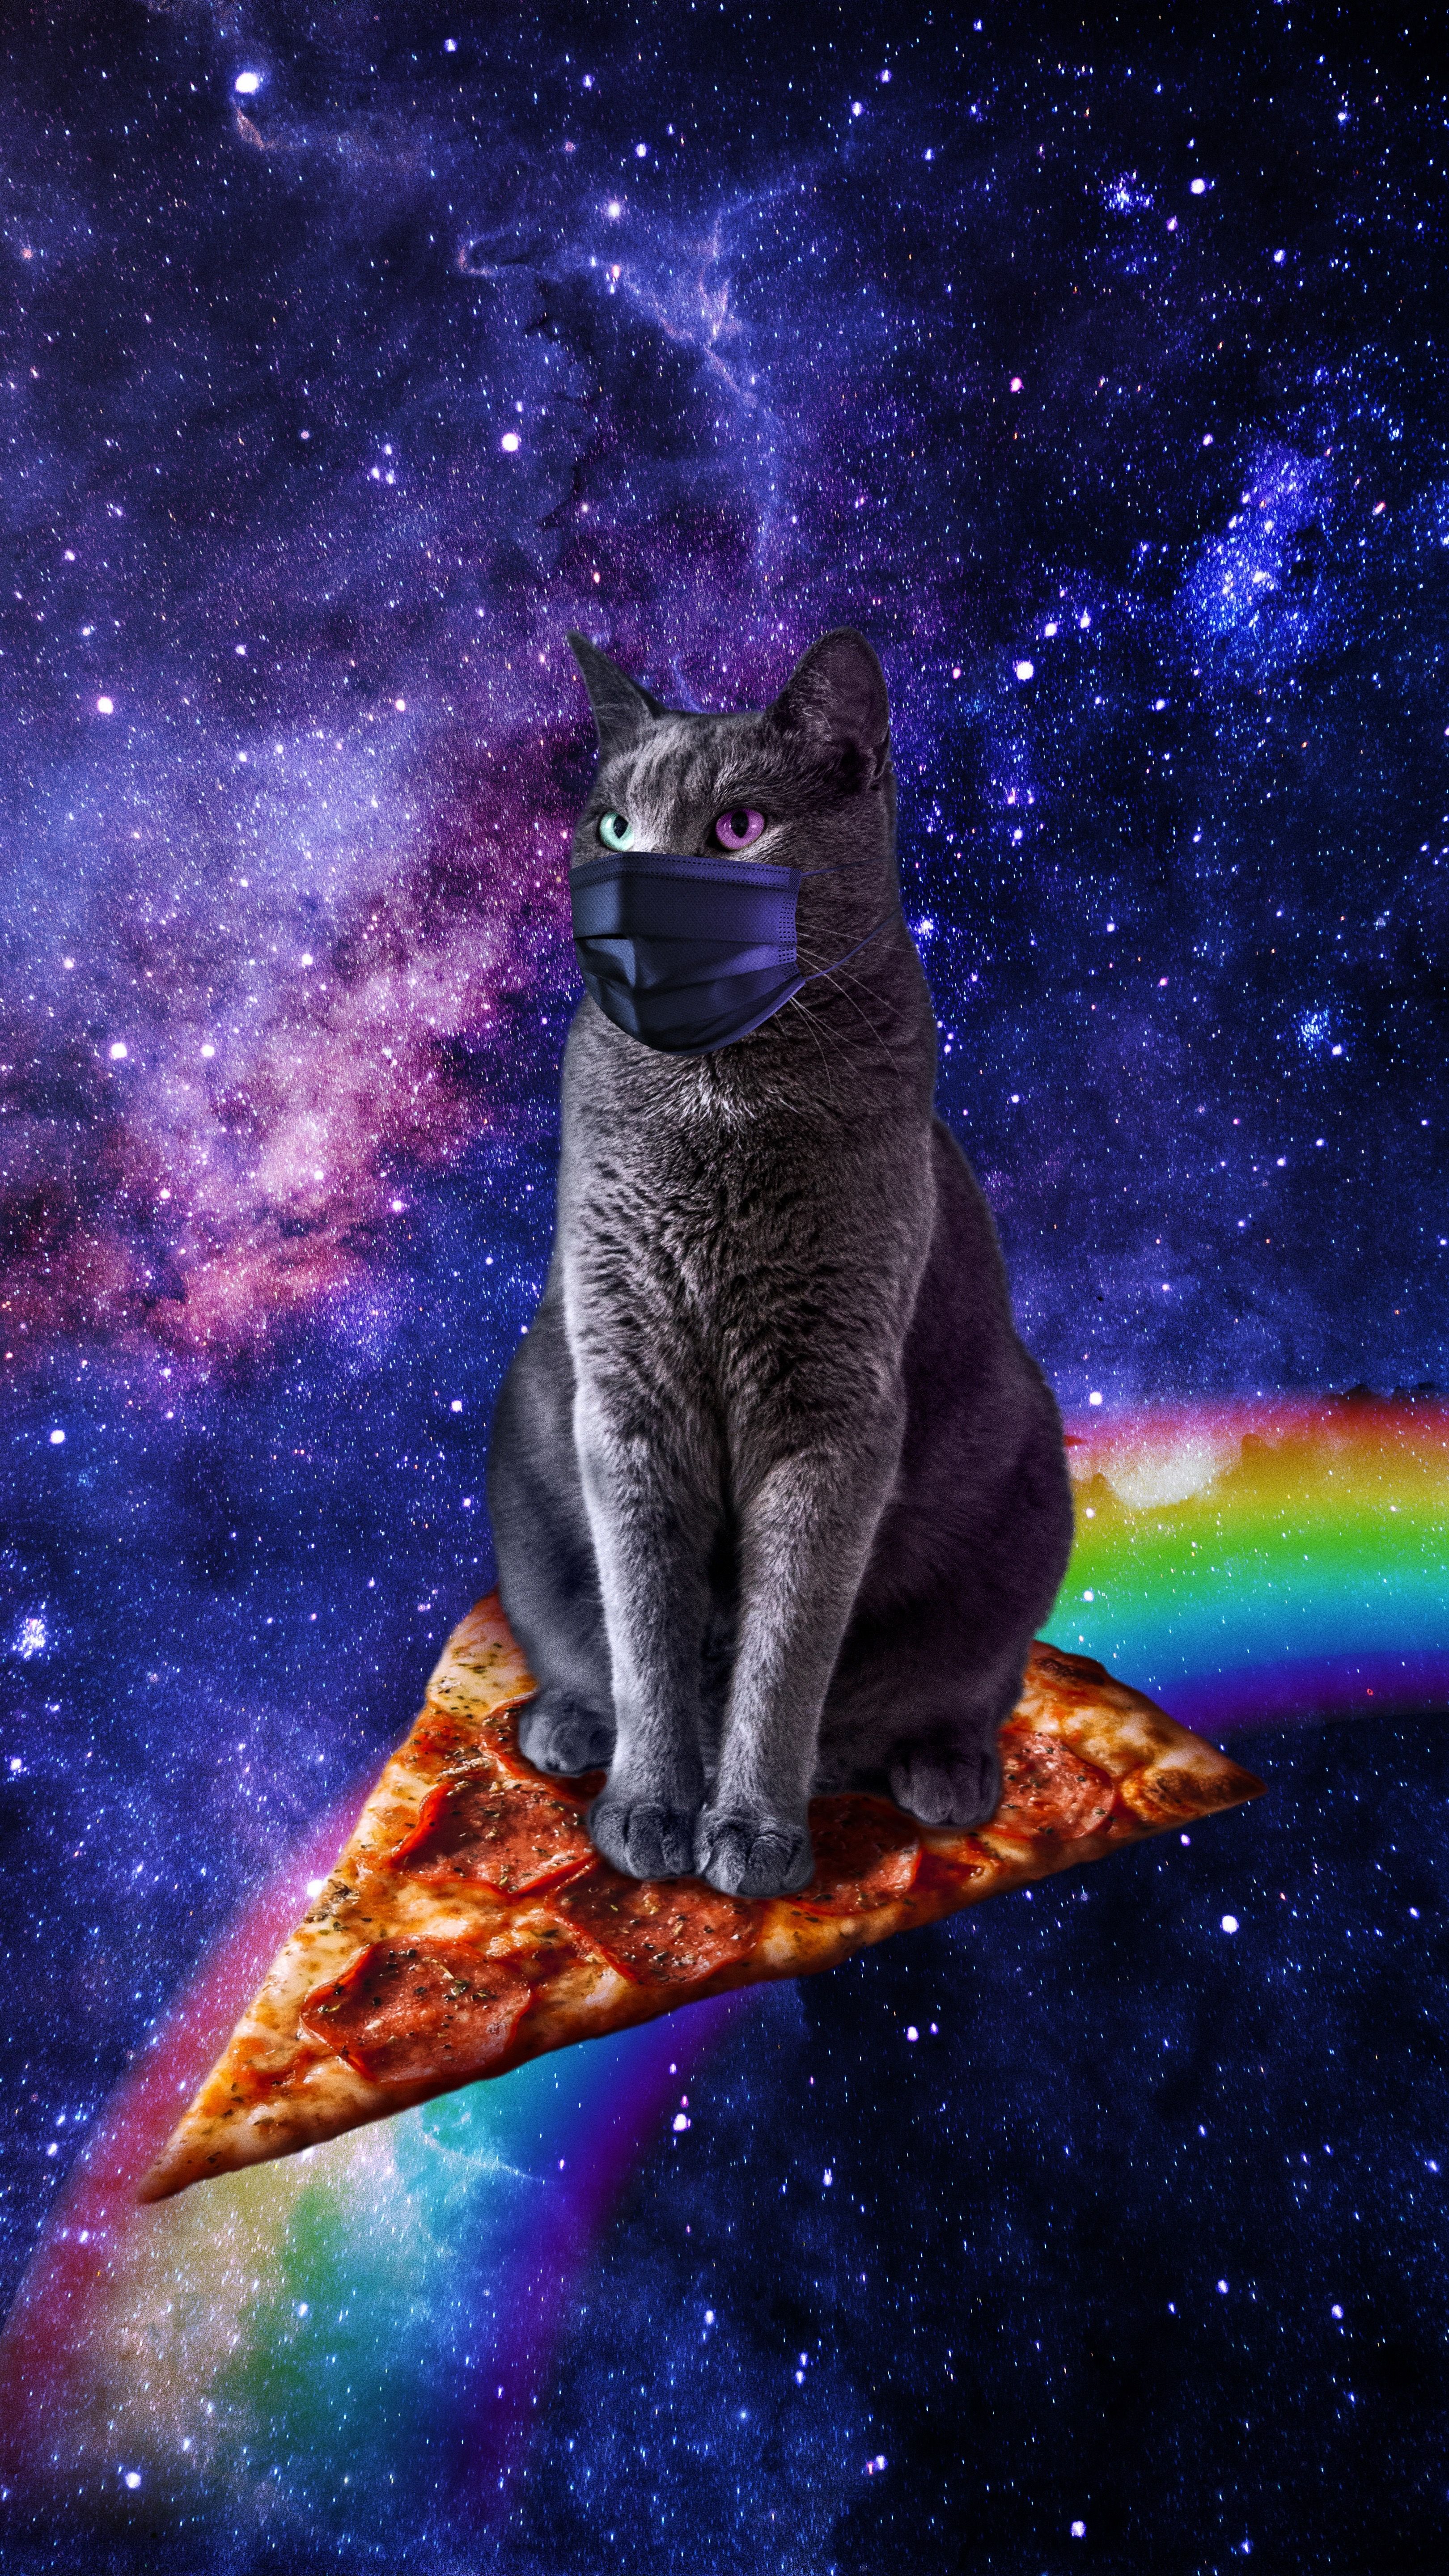 Wallpaper. Wallpaper, Space cat, Aesthetic instagram theme